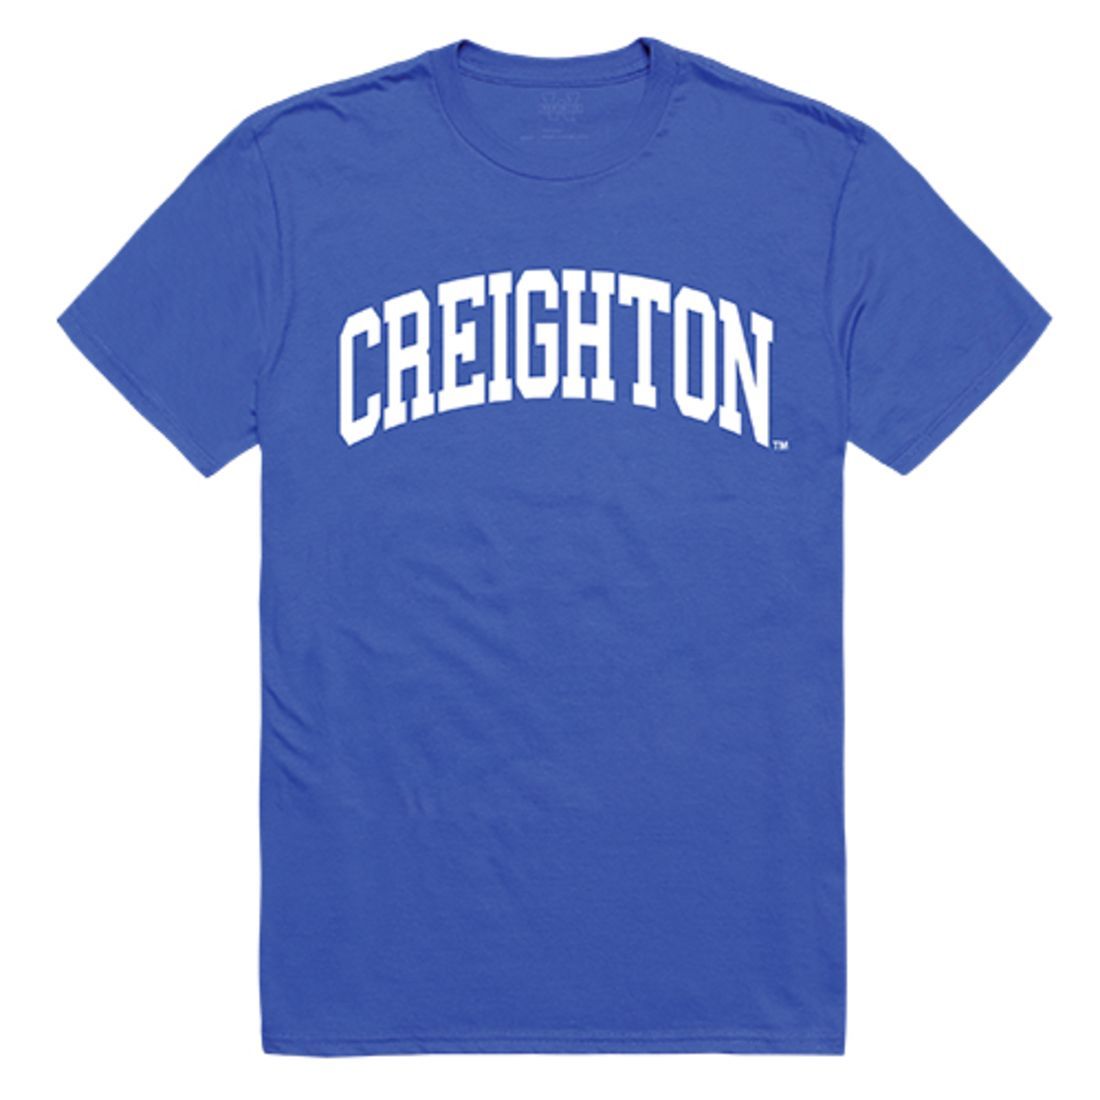 Creighton University Apparel, T-Shirts, Hats and Fan Gear